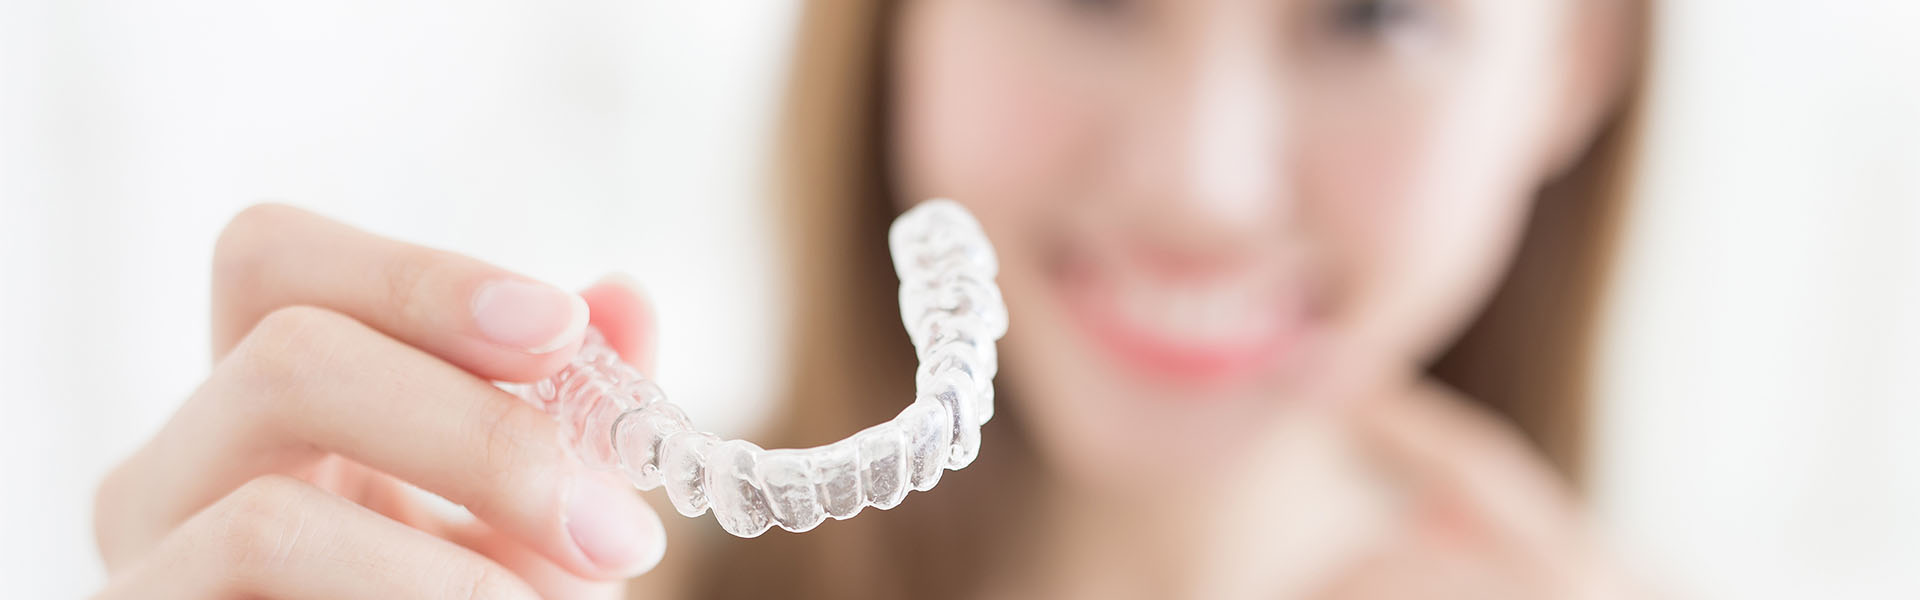 Invisalign: Tudo sobre este tratamento que revoluciona a ortodonta!